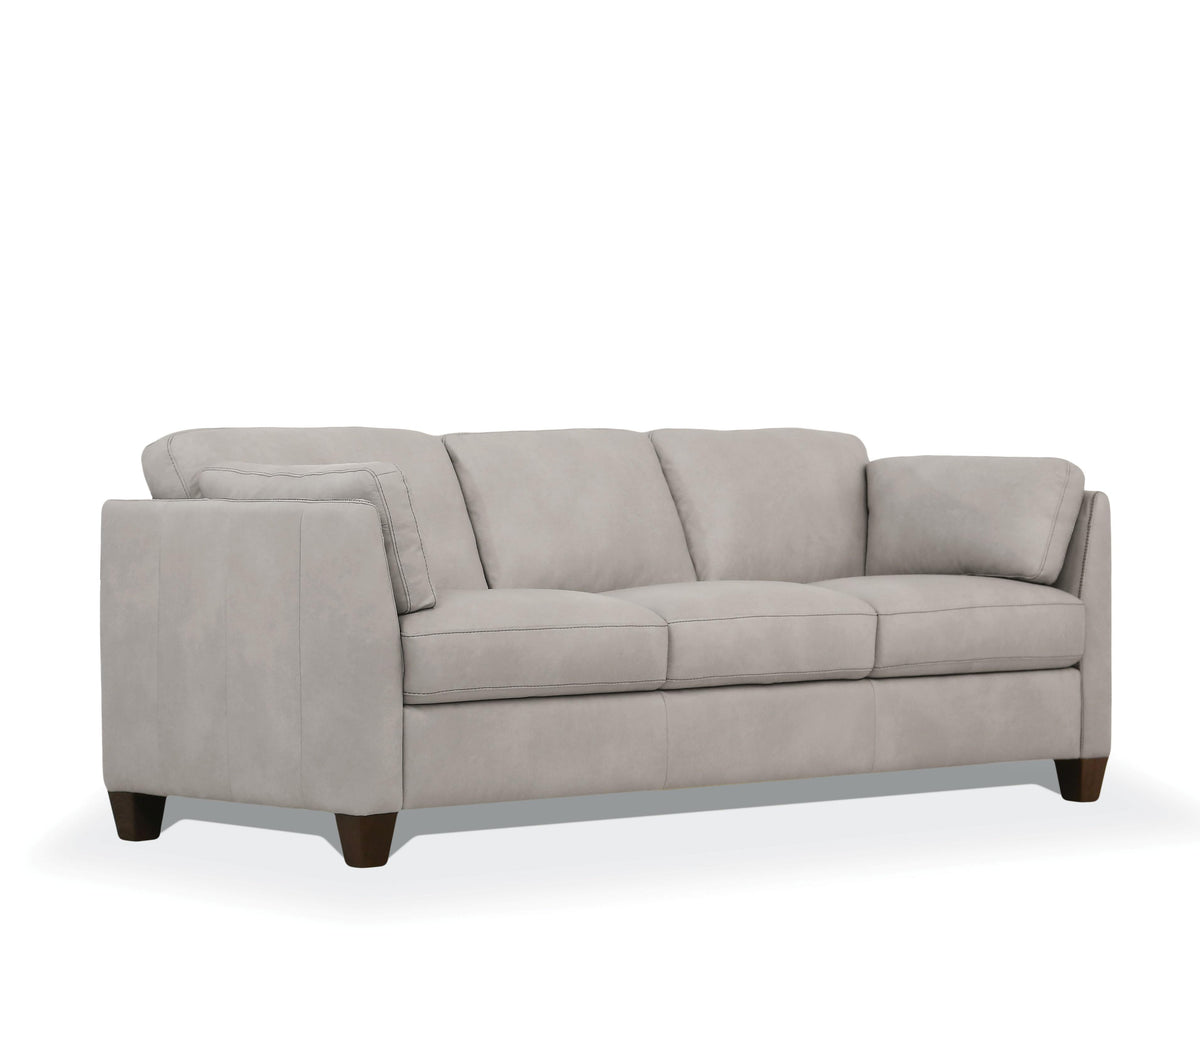 Matias Dusty White Leather Sofa  Half Price Furniture